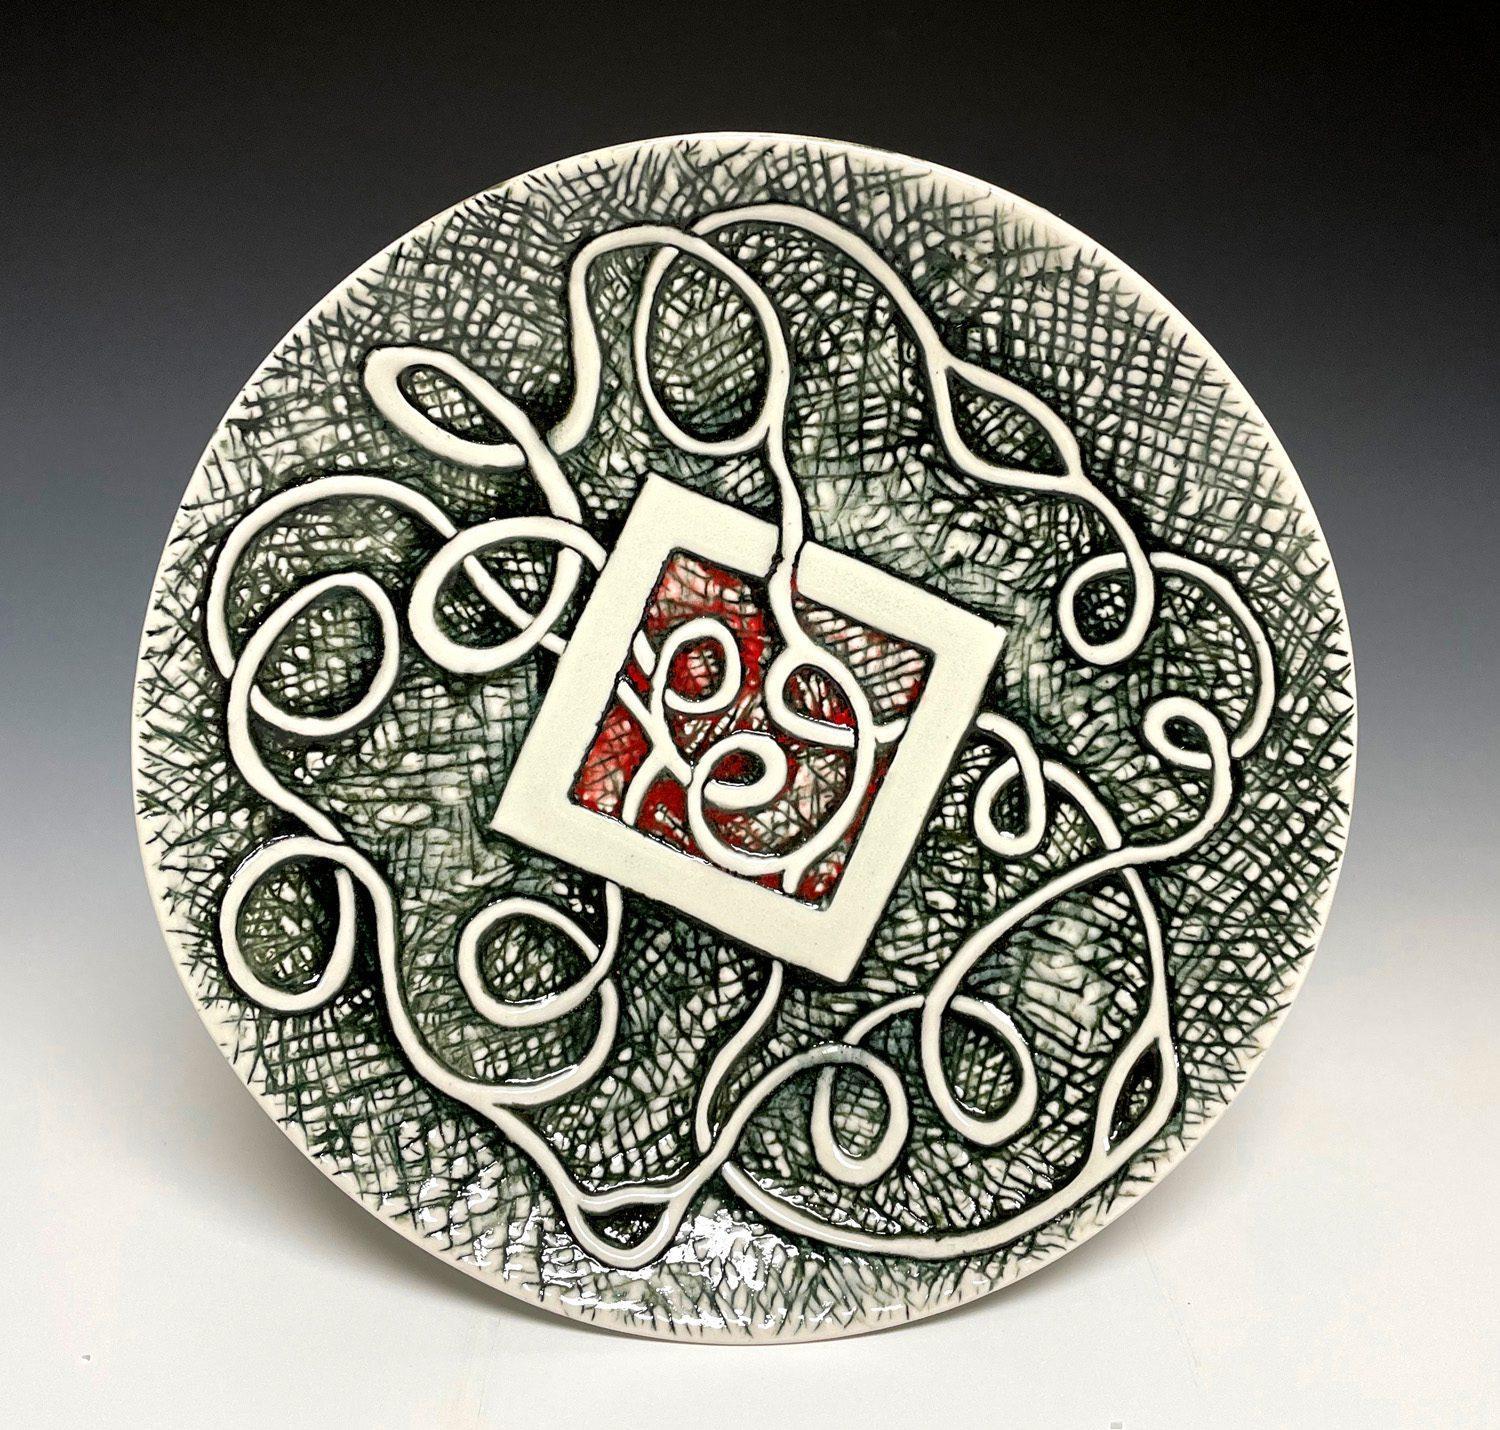 Provocative Contradictions: Ceramic Art by Harris Deller